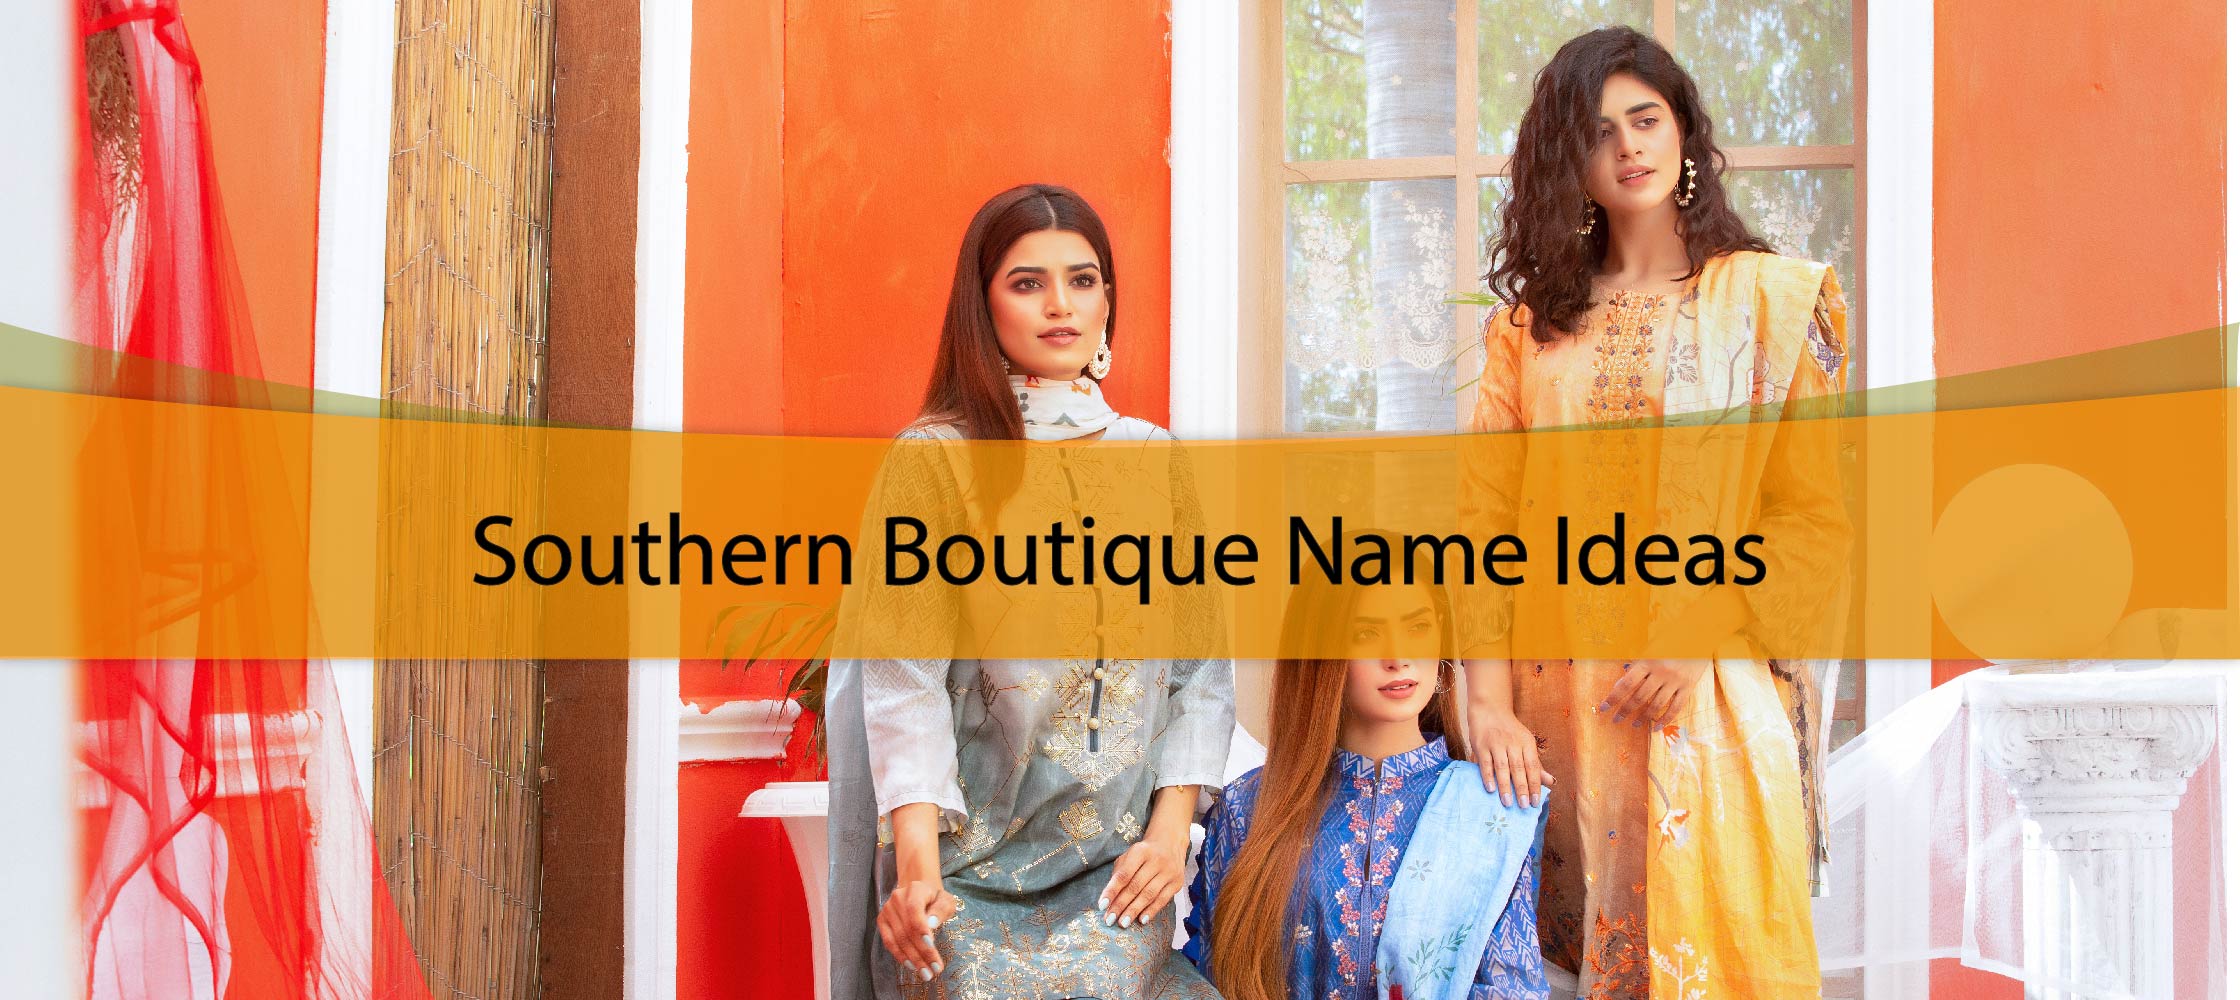 Southern Boutique Name Ideas